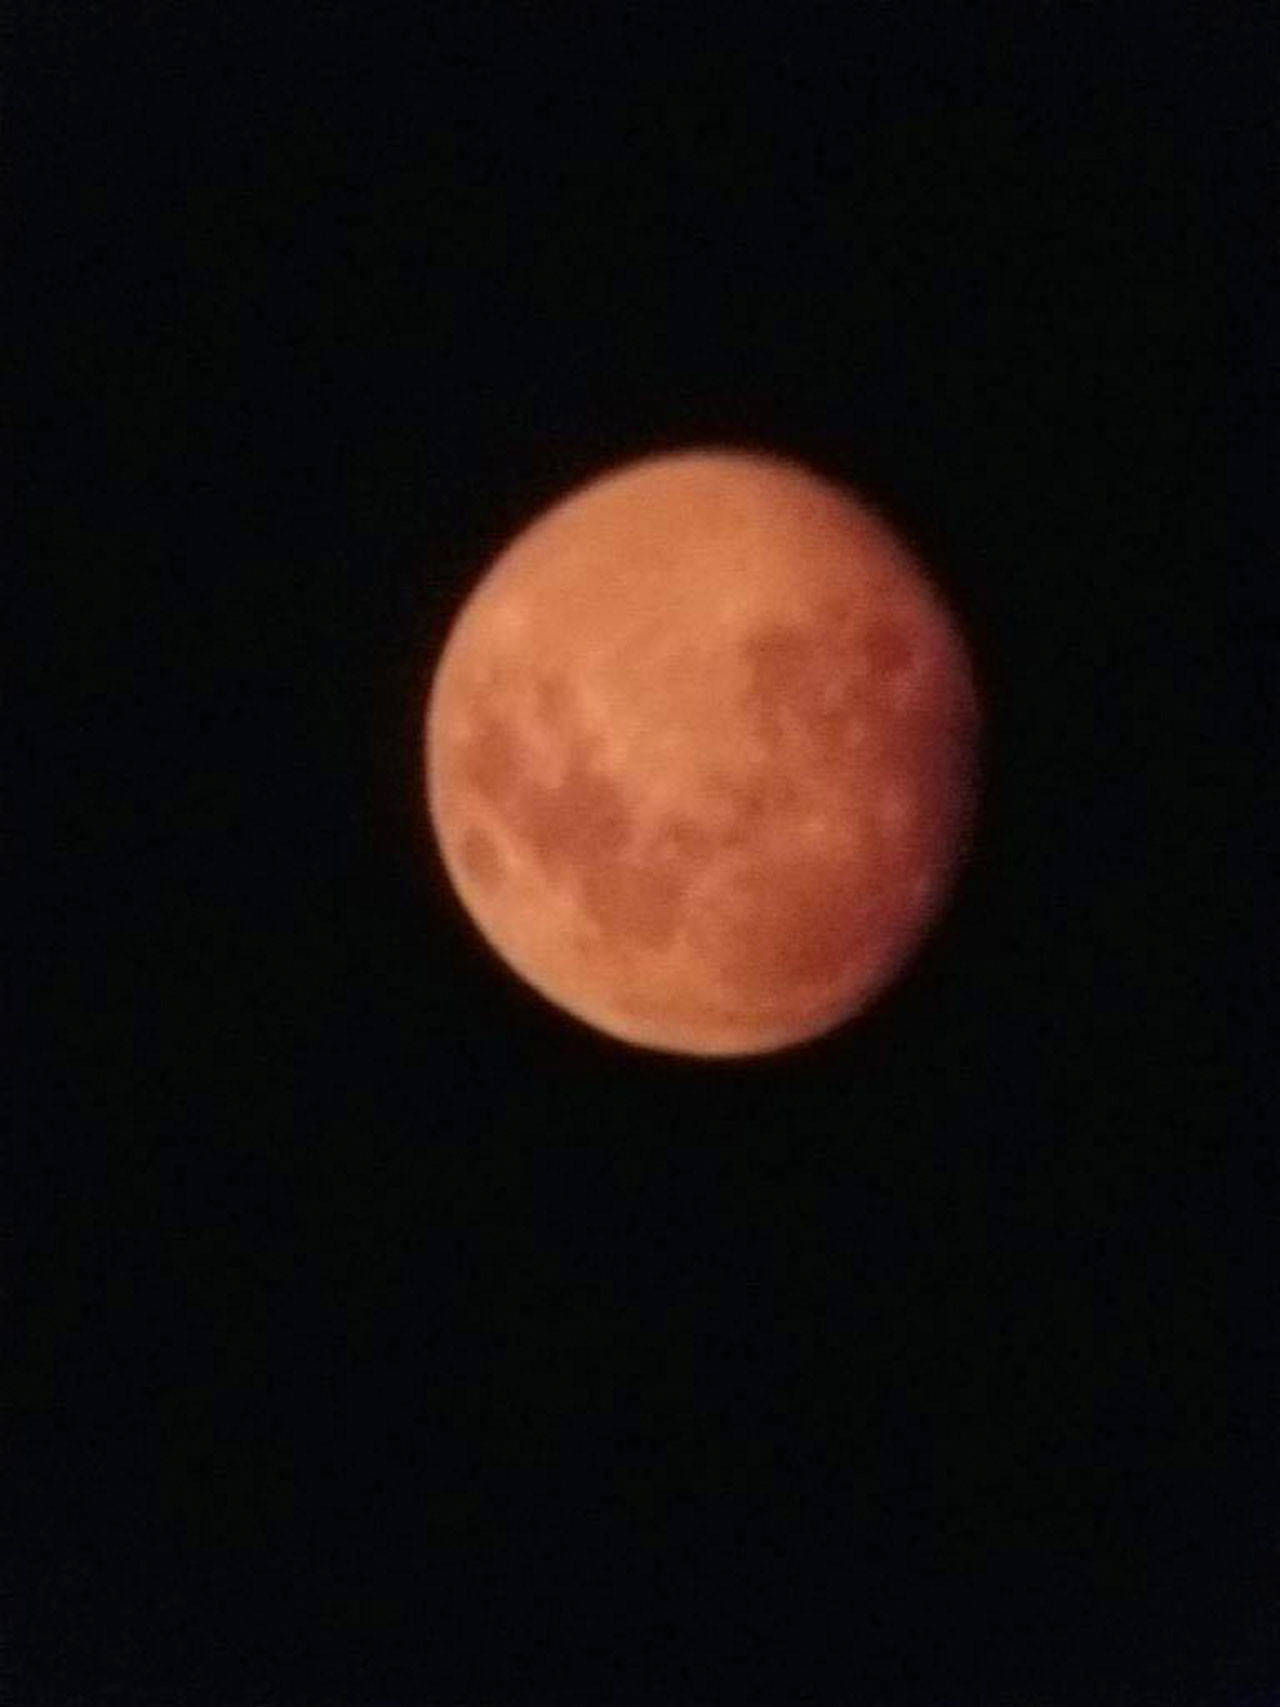 Islanders Raul and Kari Hernandez captured the orange moon through the lens of their telescope Friday. Photo by Raul Hernandez